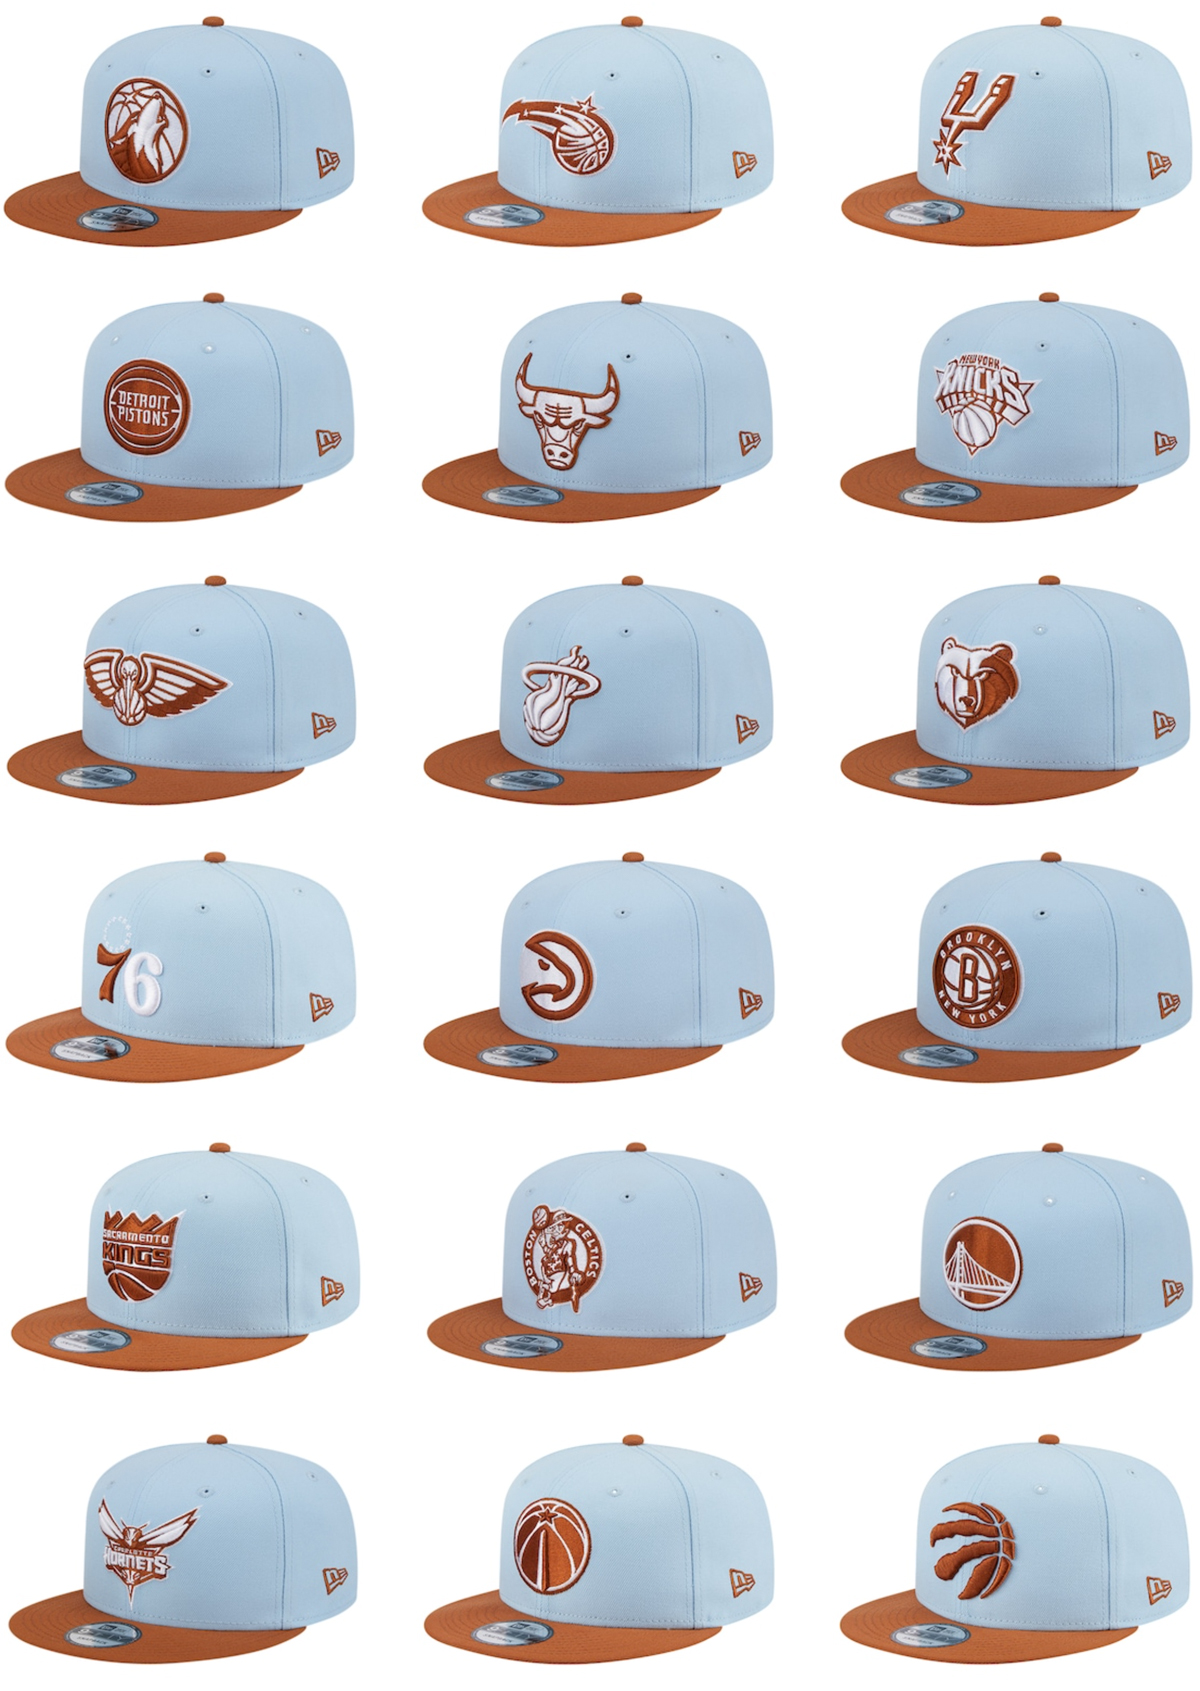 New-Era-NBA-2-Tone-Color-Pack-Snapback-Hats-Light-Blue-Brown